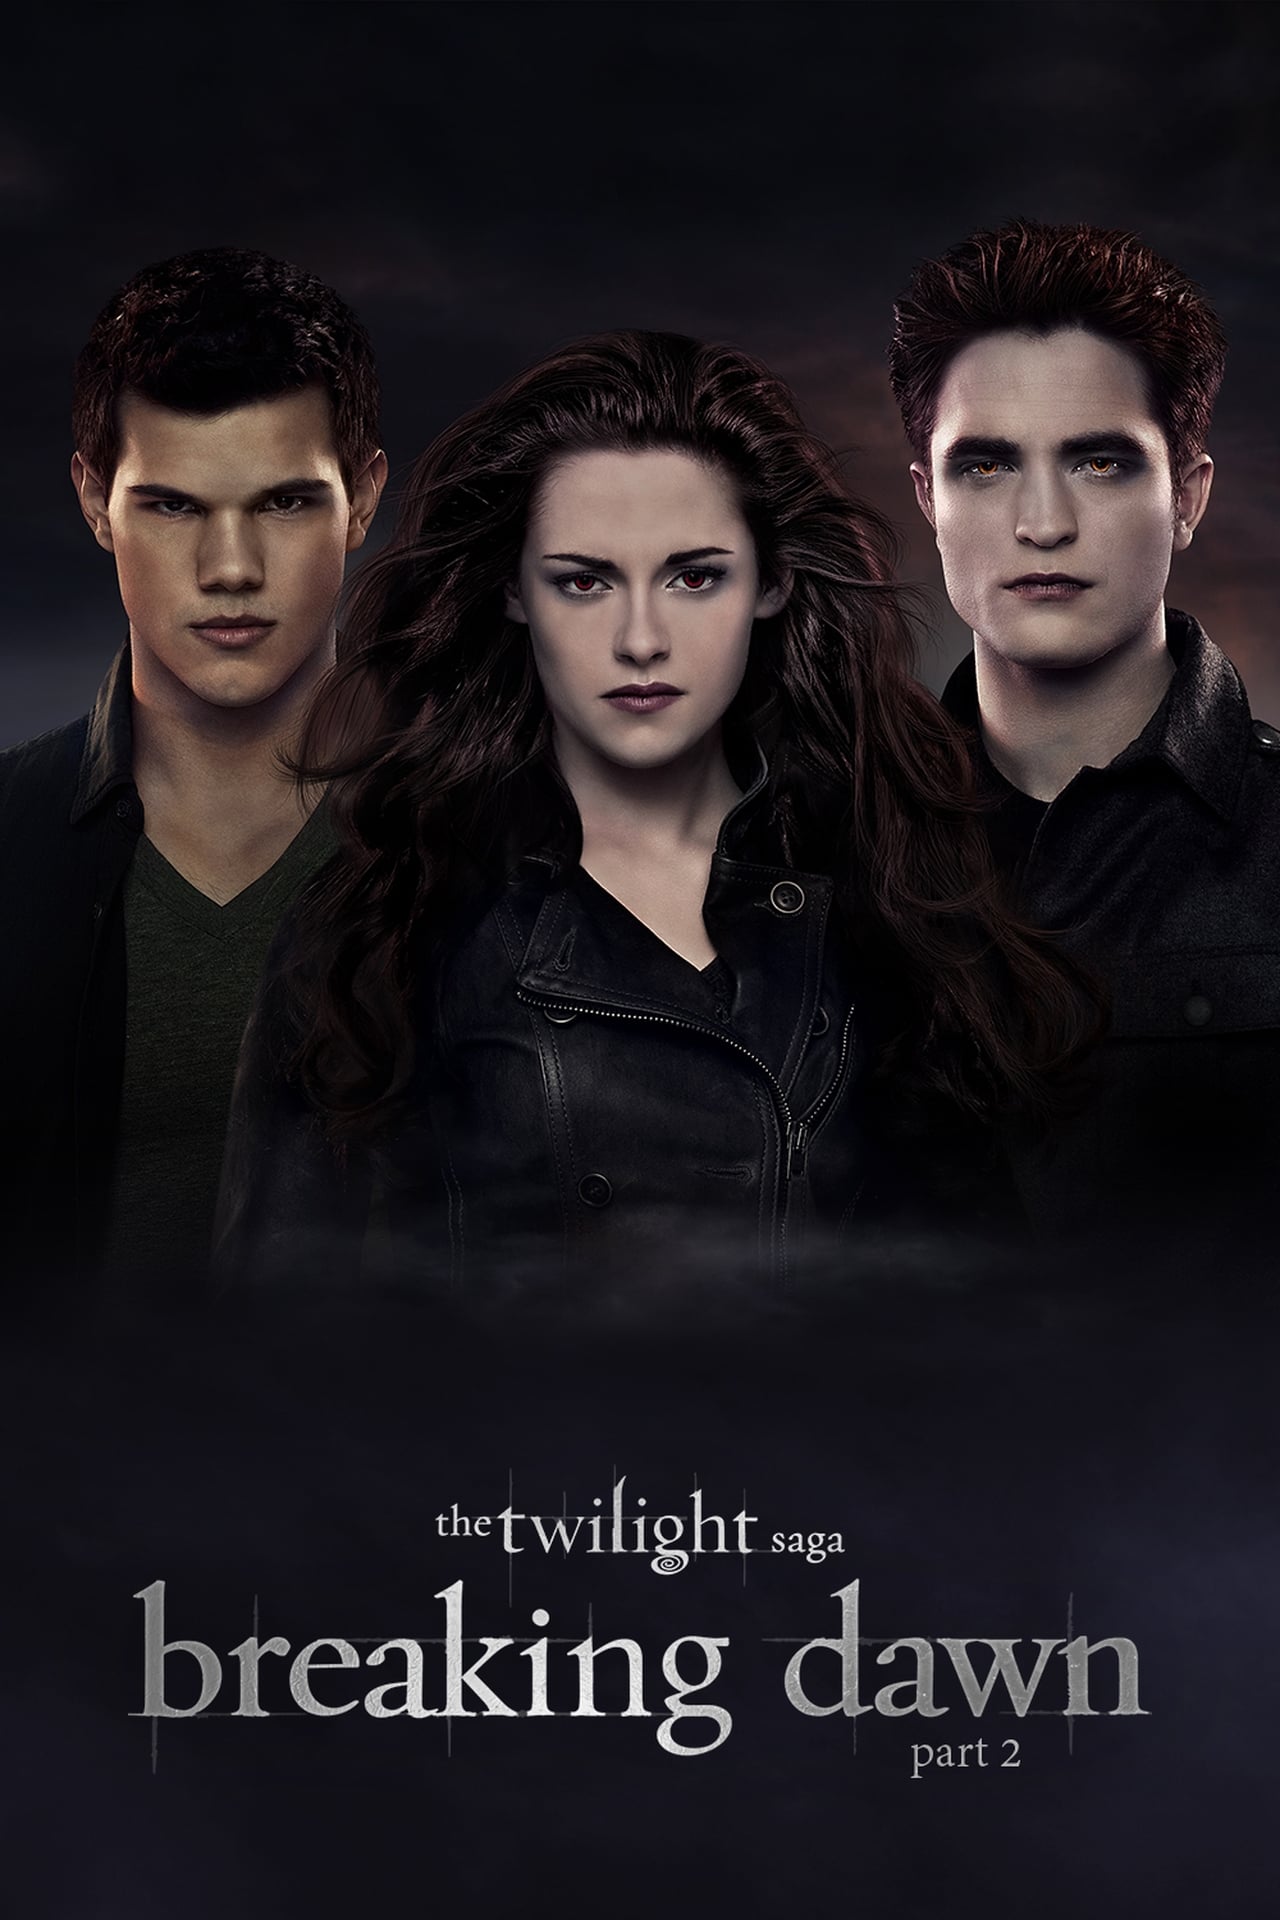 The Twilight Saga: Breaking Dawn - Part 2 wiki, synopsis, reviews - Where To Watch Twilight Breaking Dawn Part 2